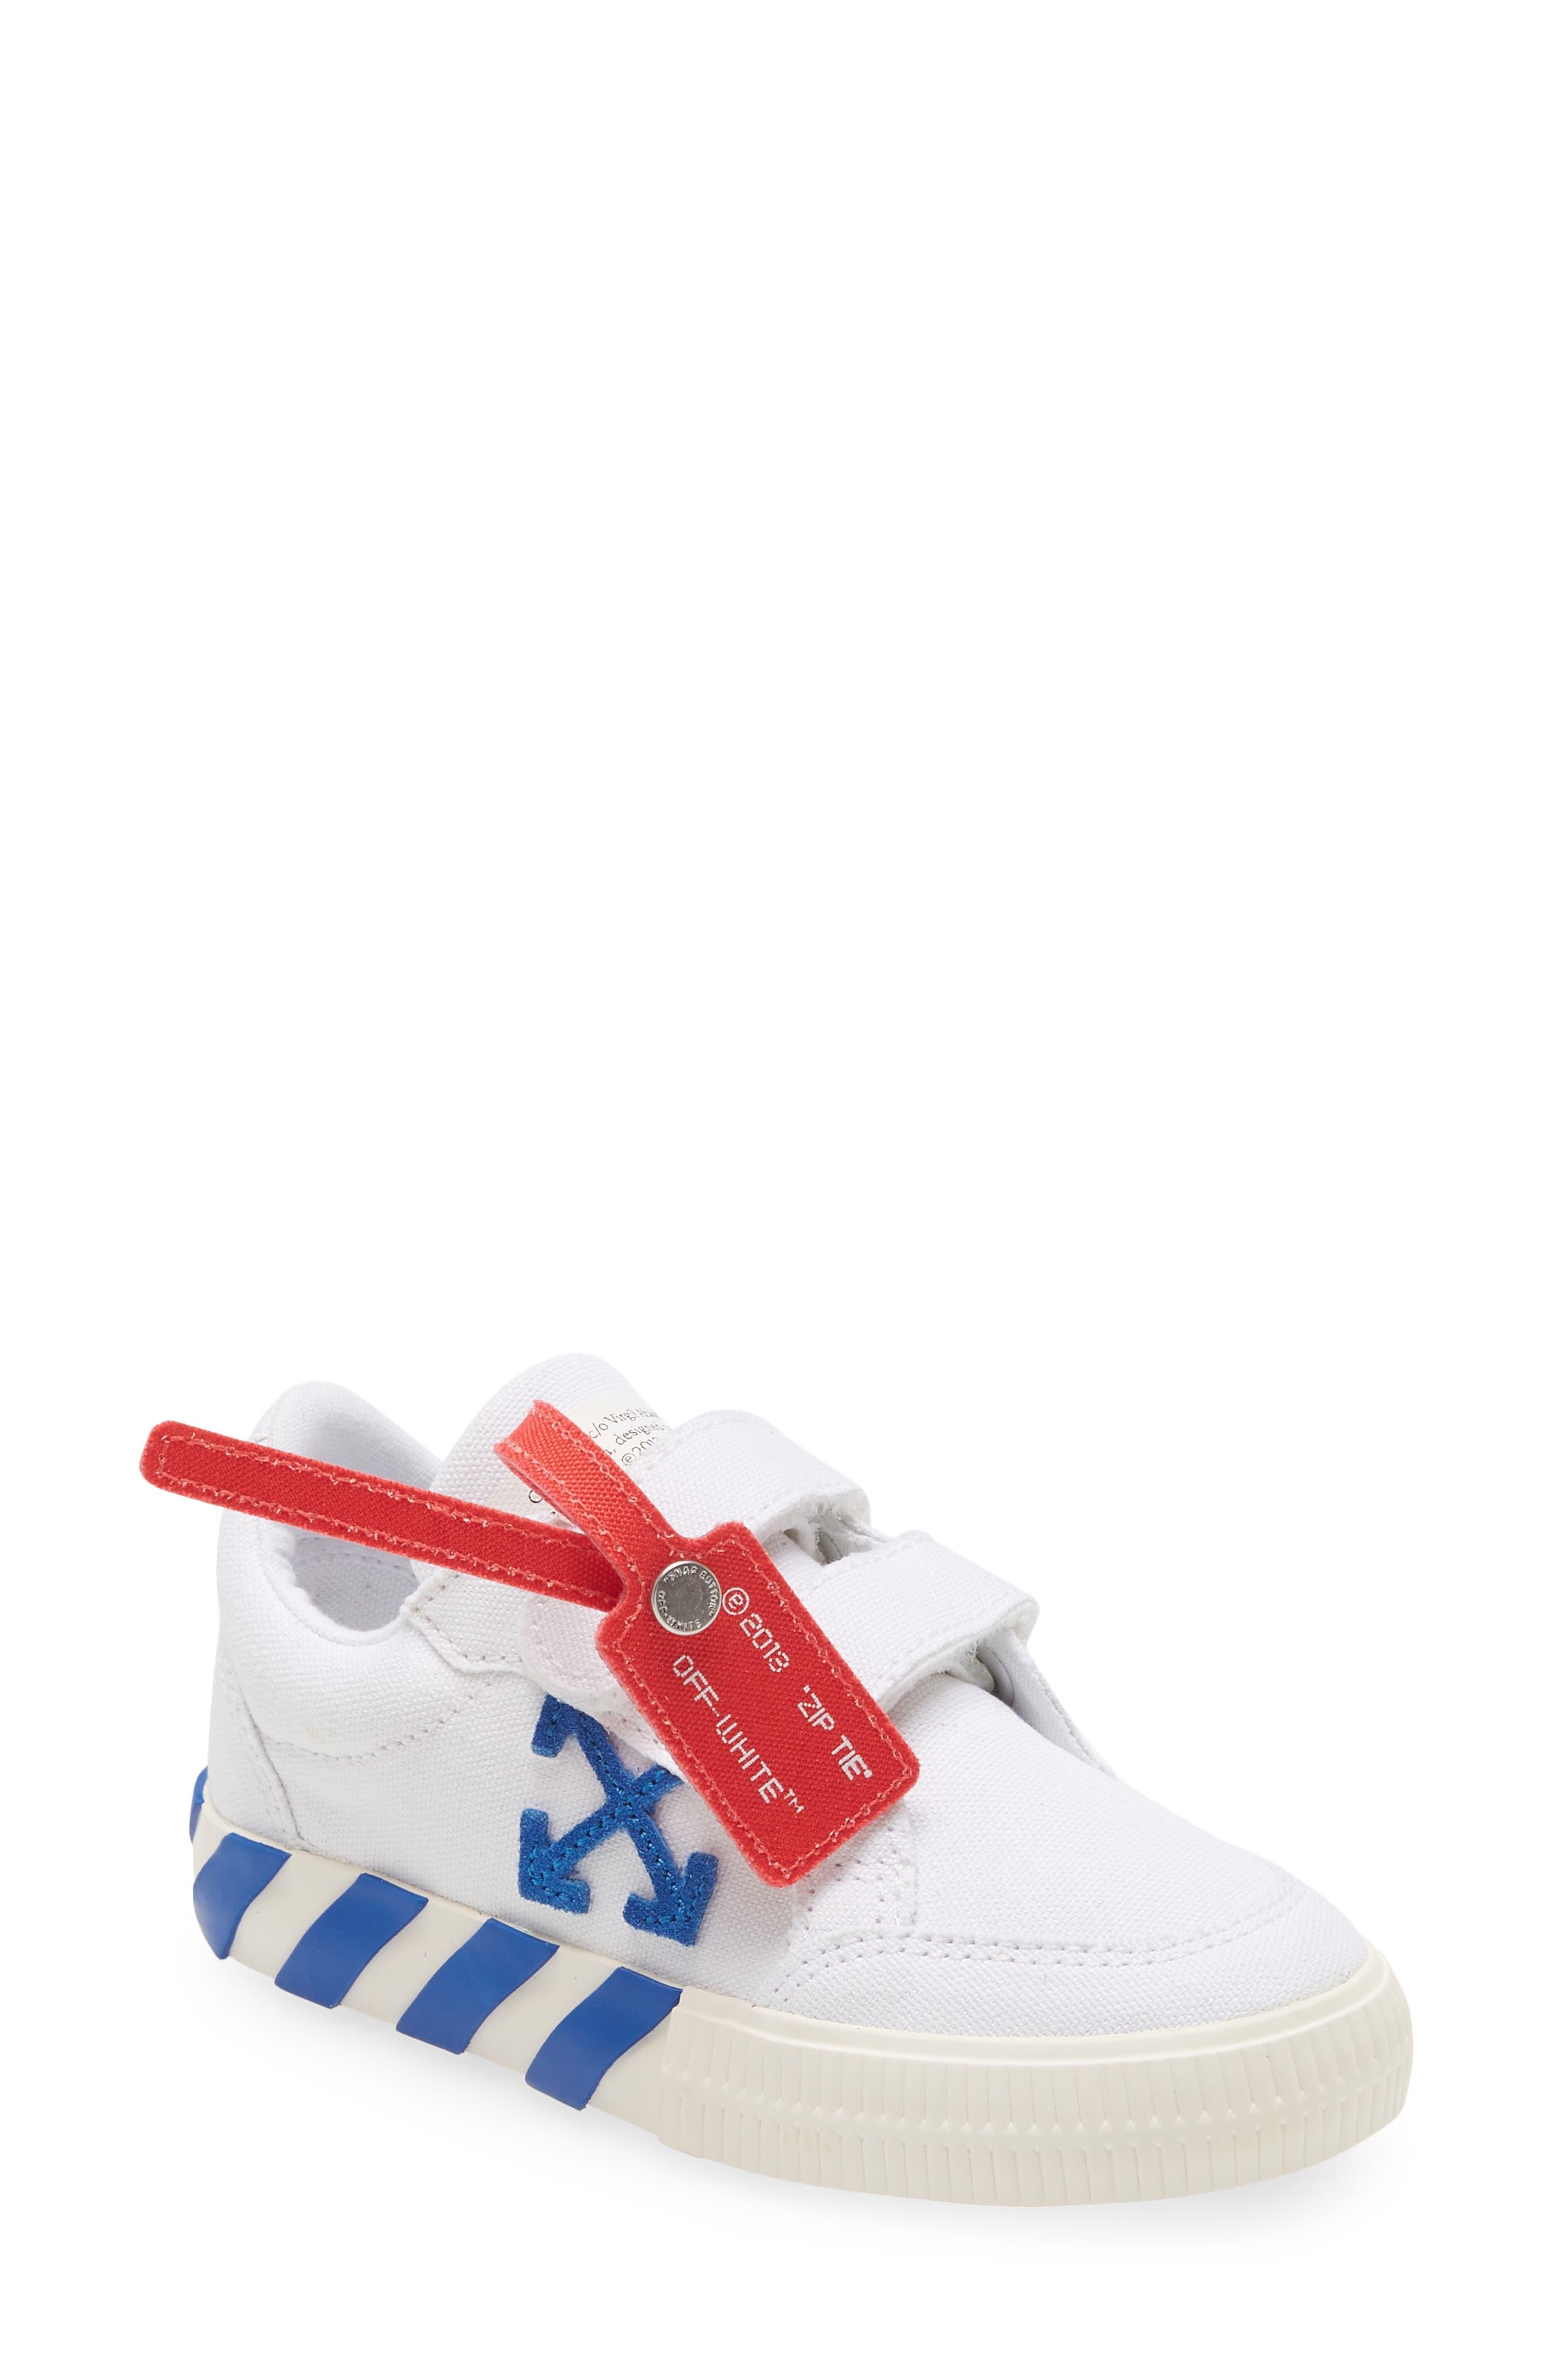 Off-White c/o Virgil Abloh Kids' Vulcanized Low Top Sneaker in White | Lyst